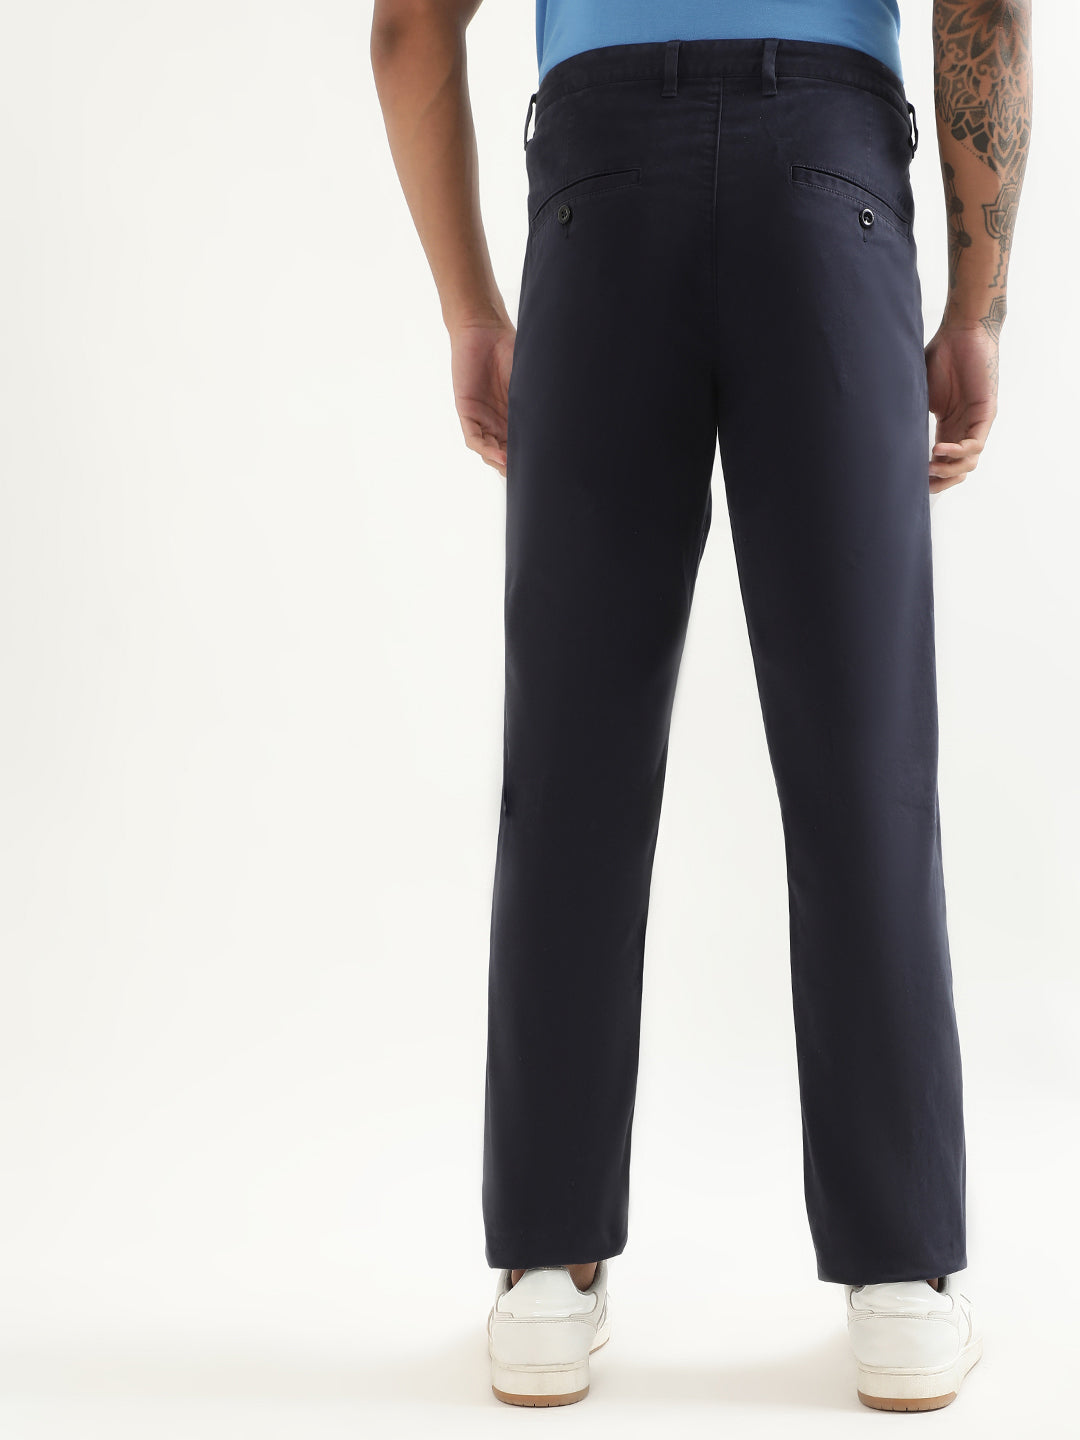 Skinny Fit Suit Pants - Dark blue - Men | H&M US